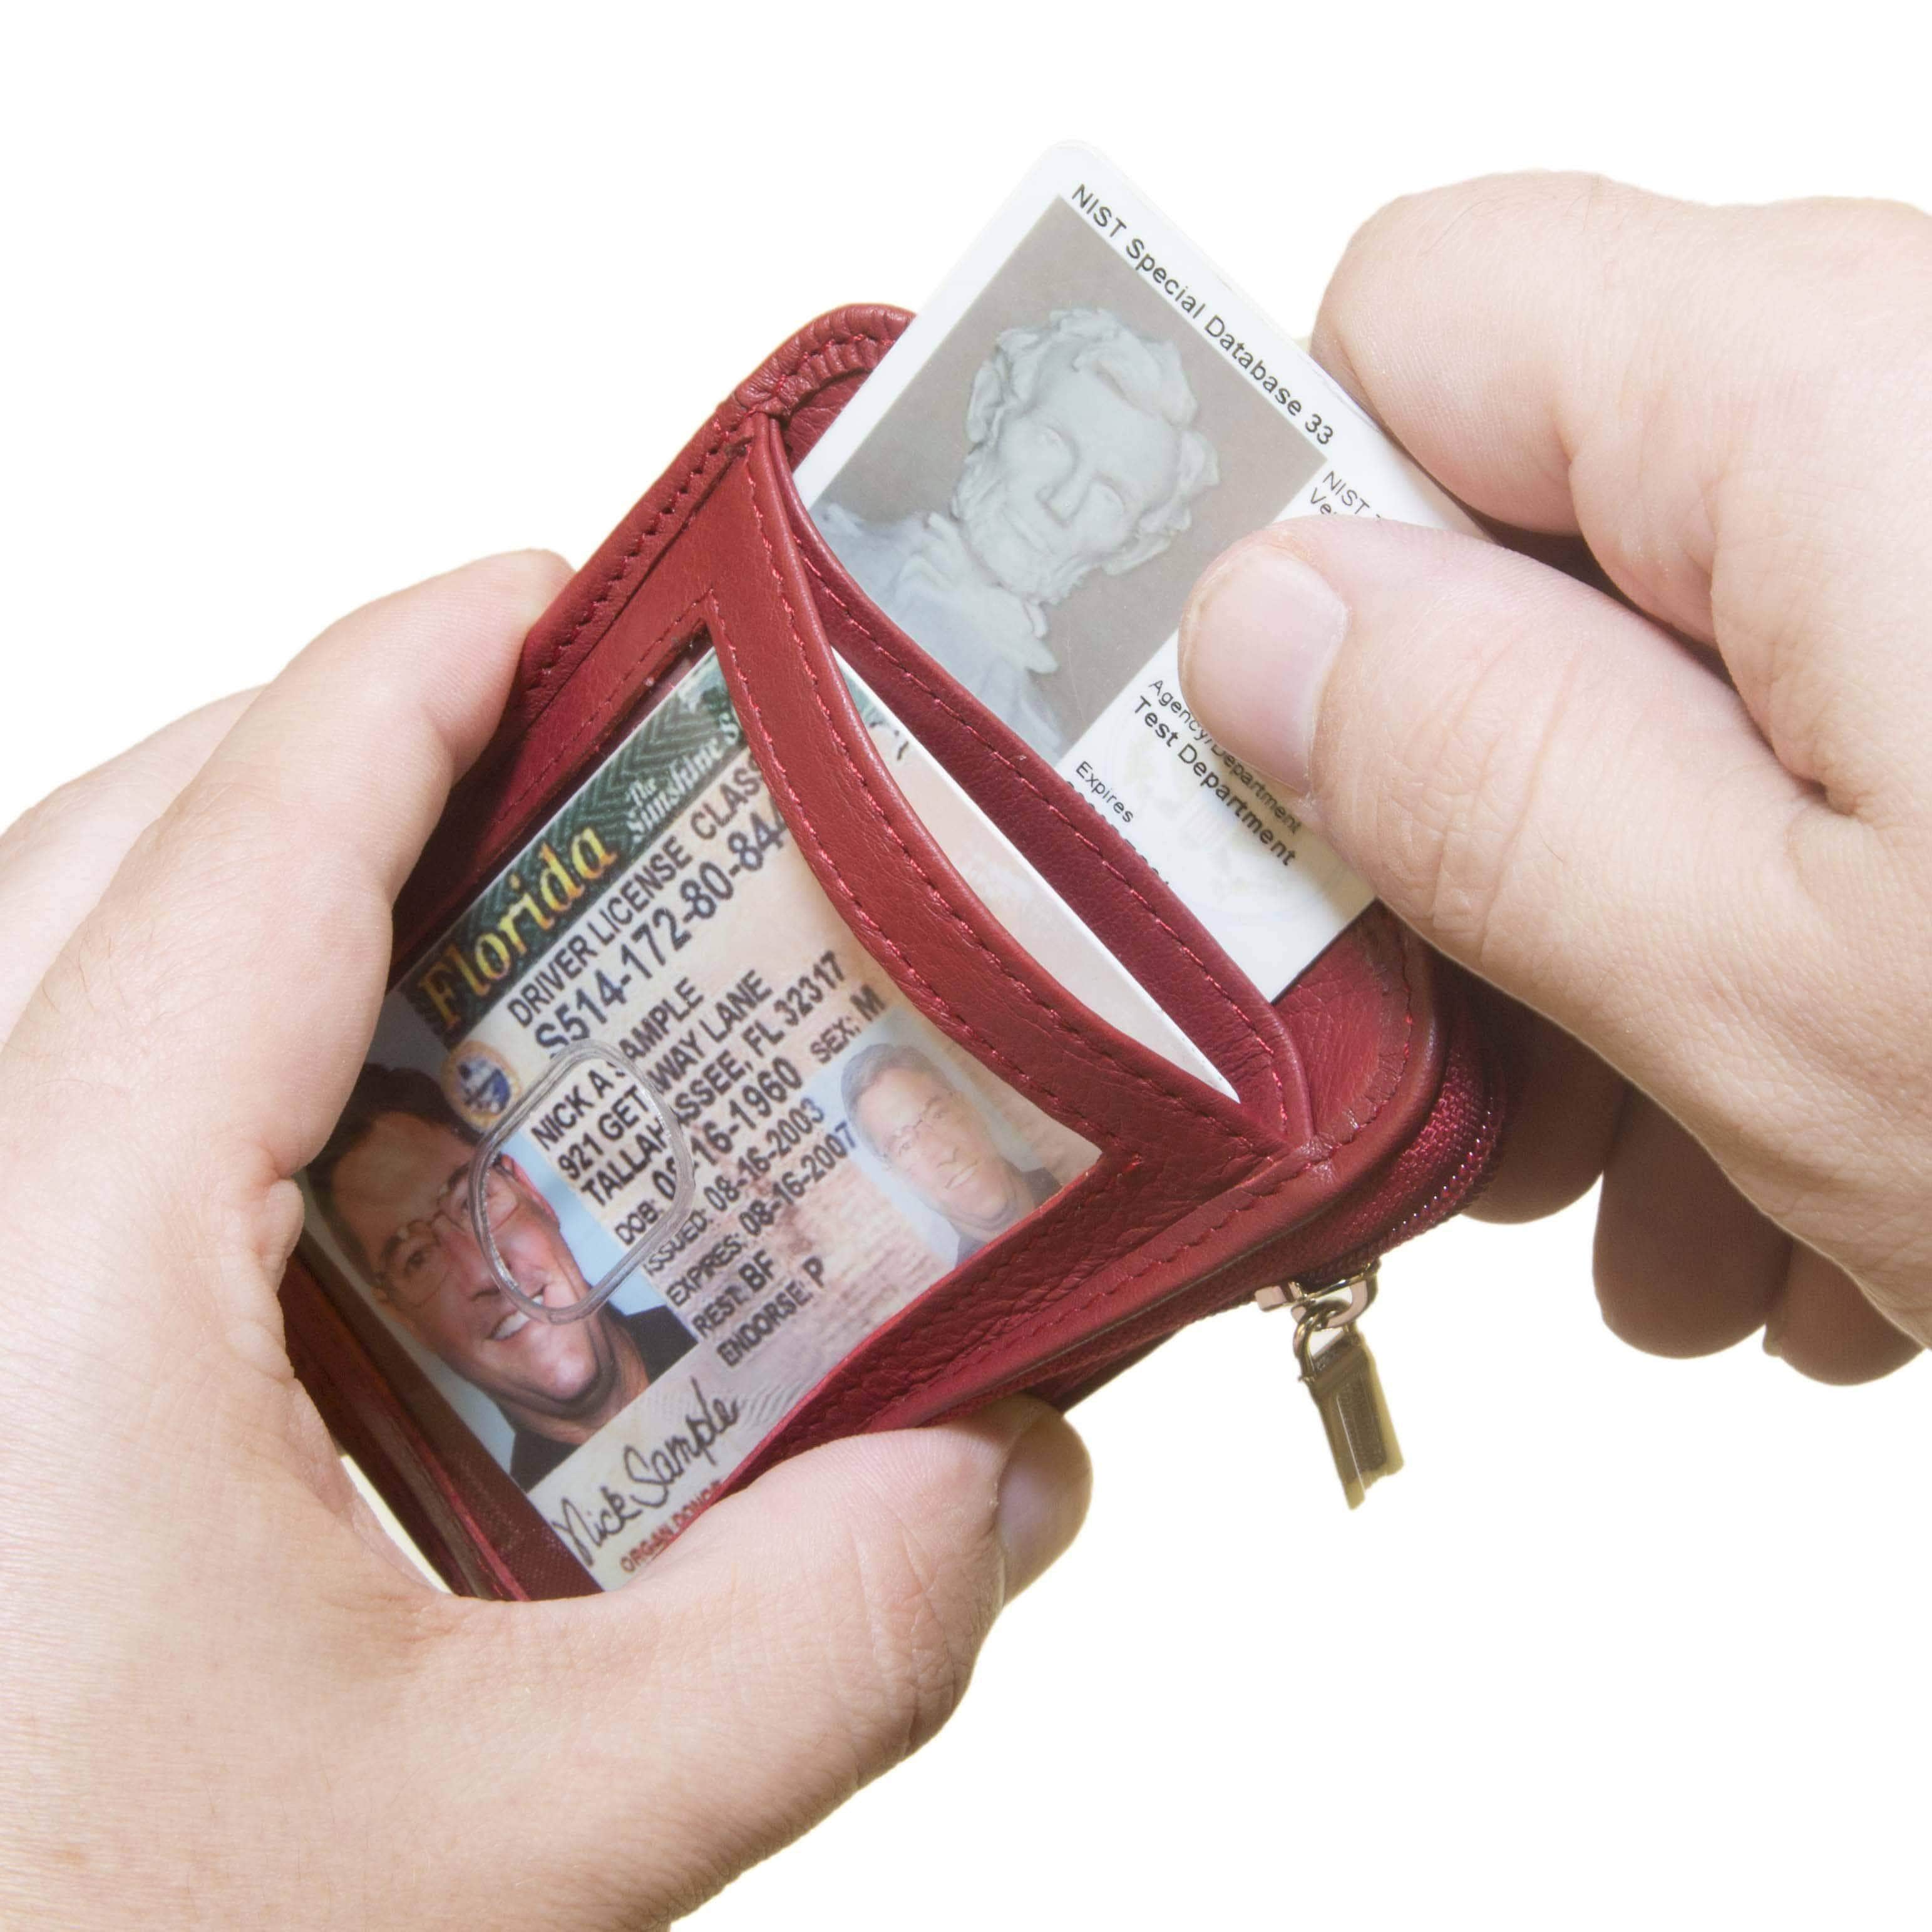 ID Stronghold RFID Mini Wallet